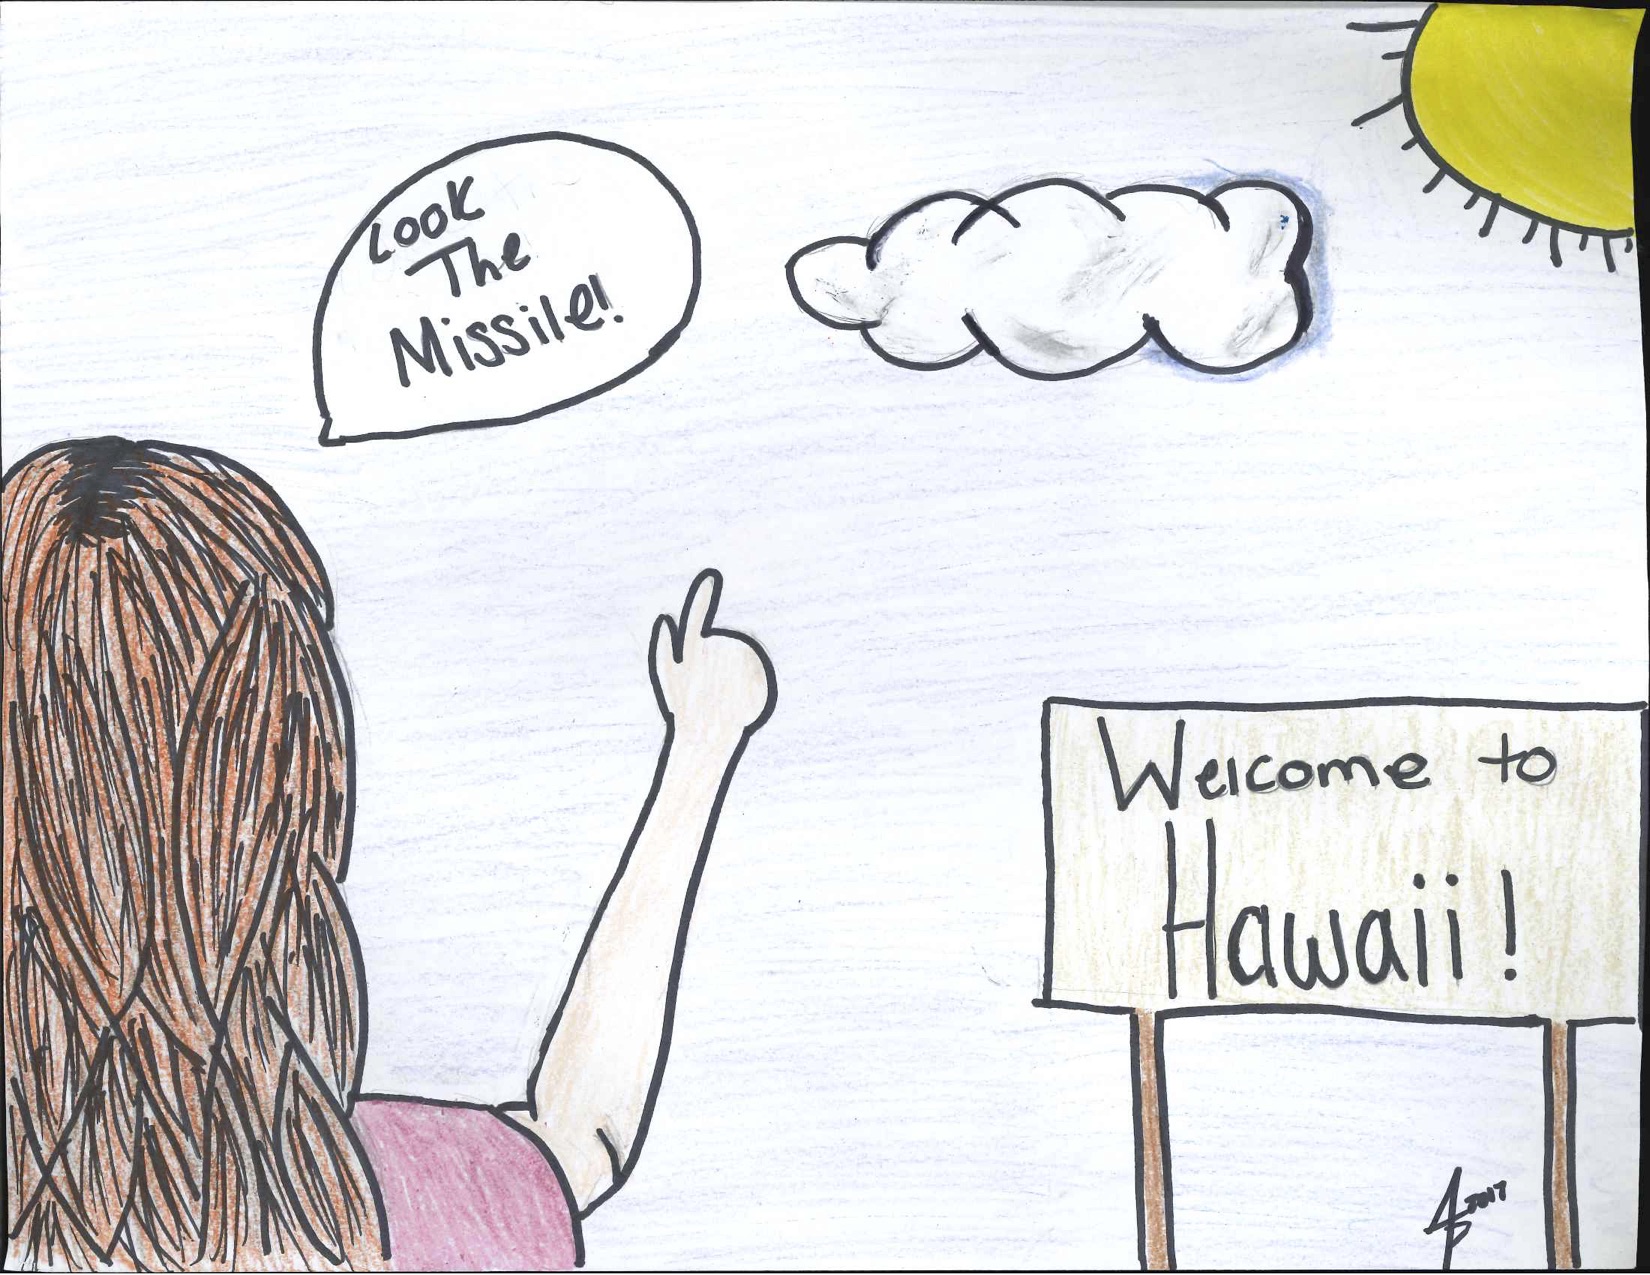 Editorial Cartoon: “Hawaii Missile Incoming!”